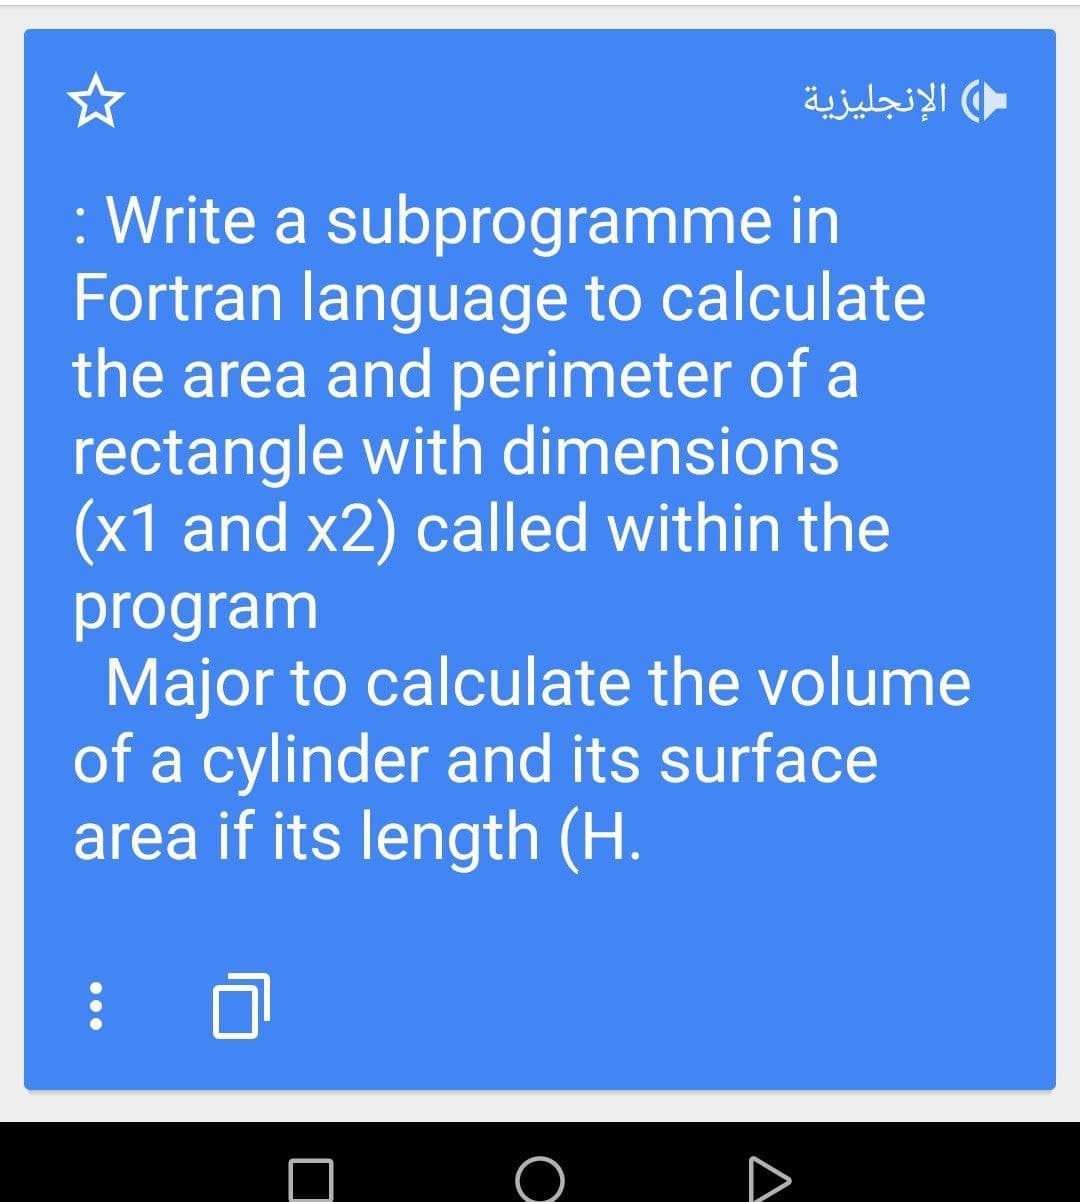 الإنجليزية
: Write a subprogramme in
Fortran language to calculate
the area and perimeter of a
rectangle with dimensions
(x1 and x2) called within the
program
Major to calculate the volume
of a cylinder and its surface
area if its length (H.
